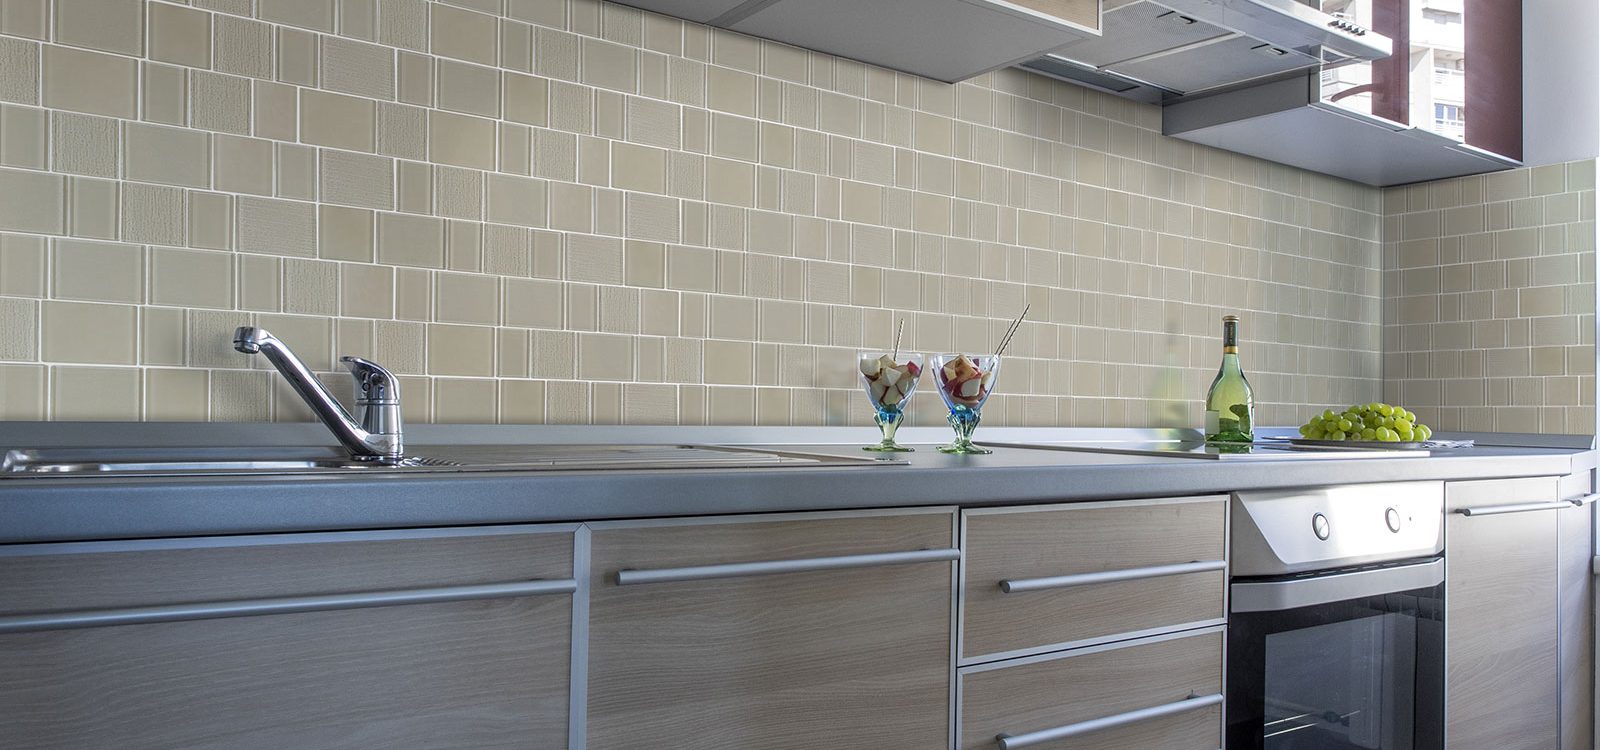 Modern Design Kitchen Backsplash, Tan Subway Tile